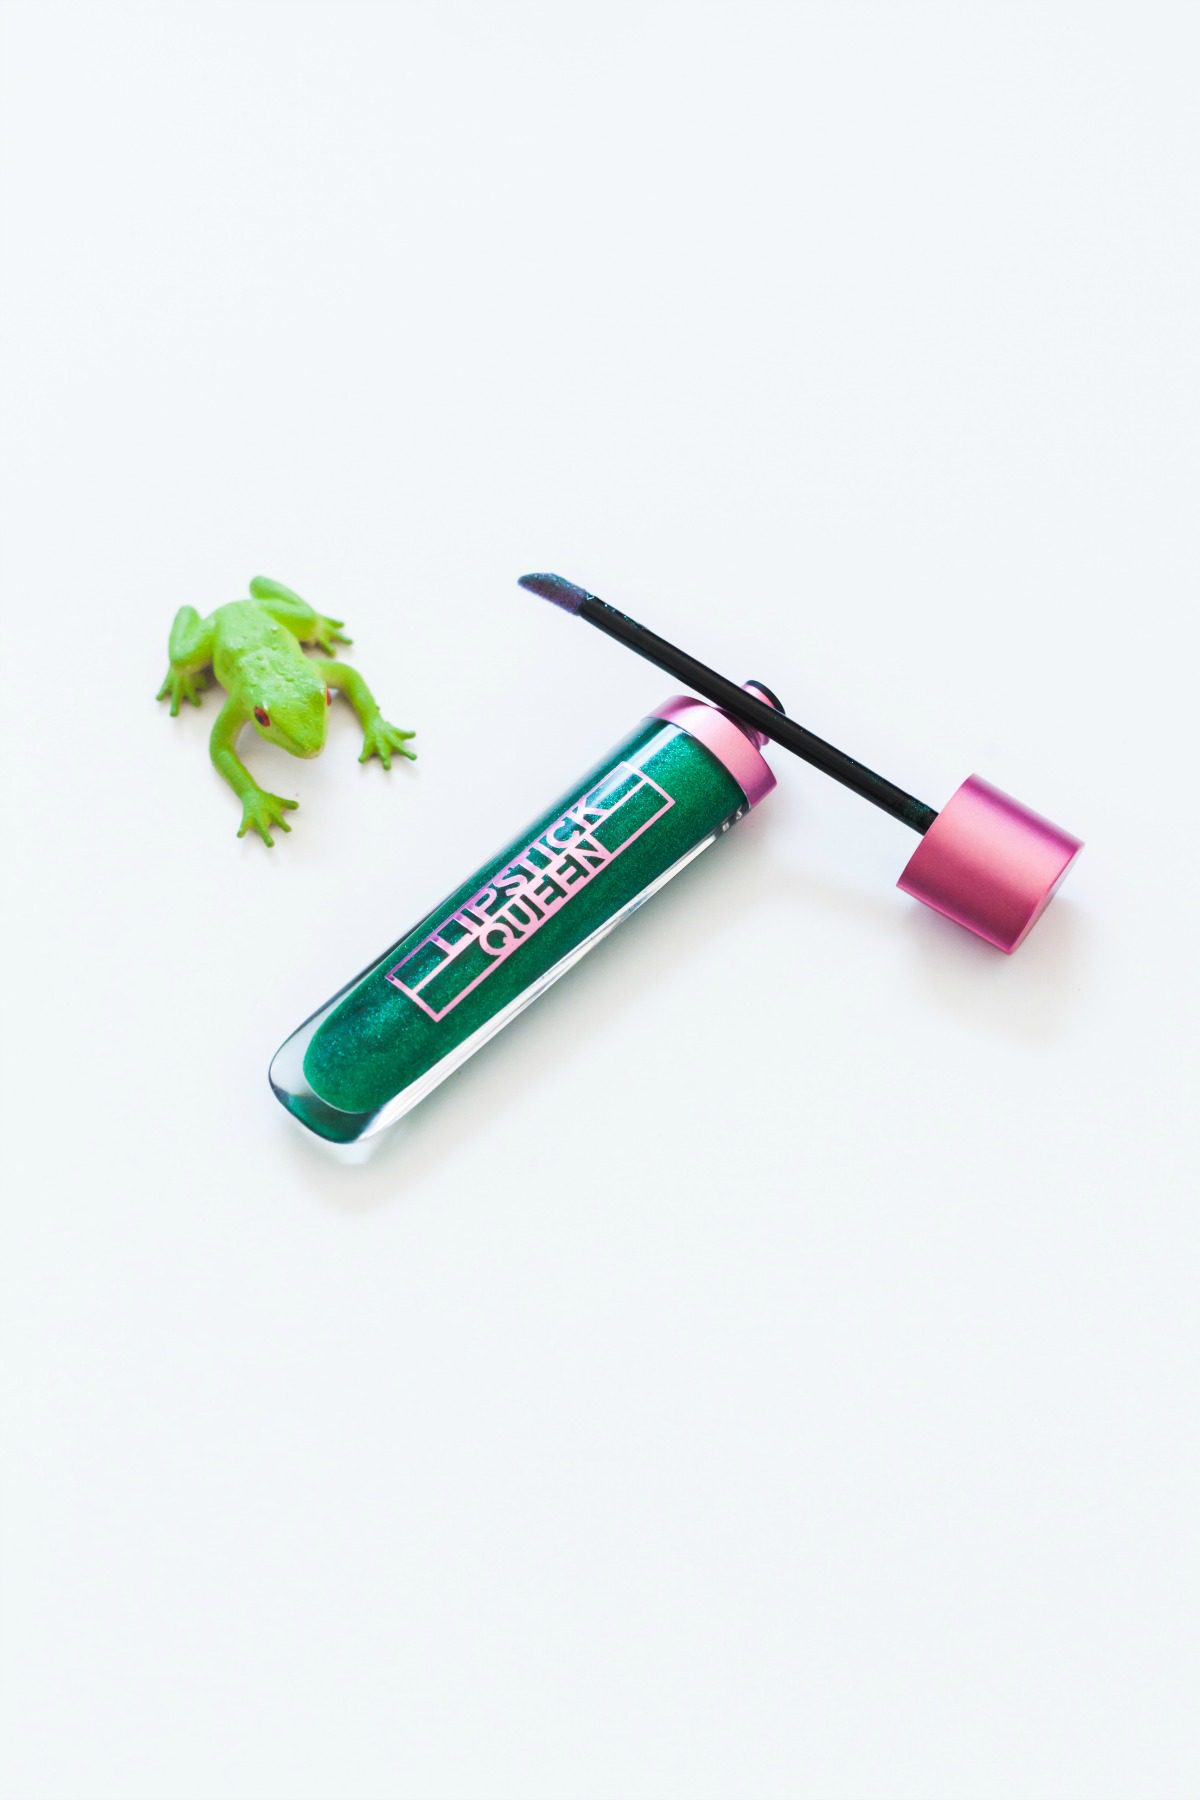 Lipstick Queen Frog Prince lip gloss - Honestly Jamie